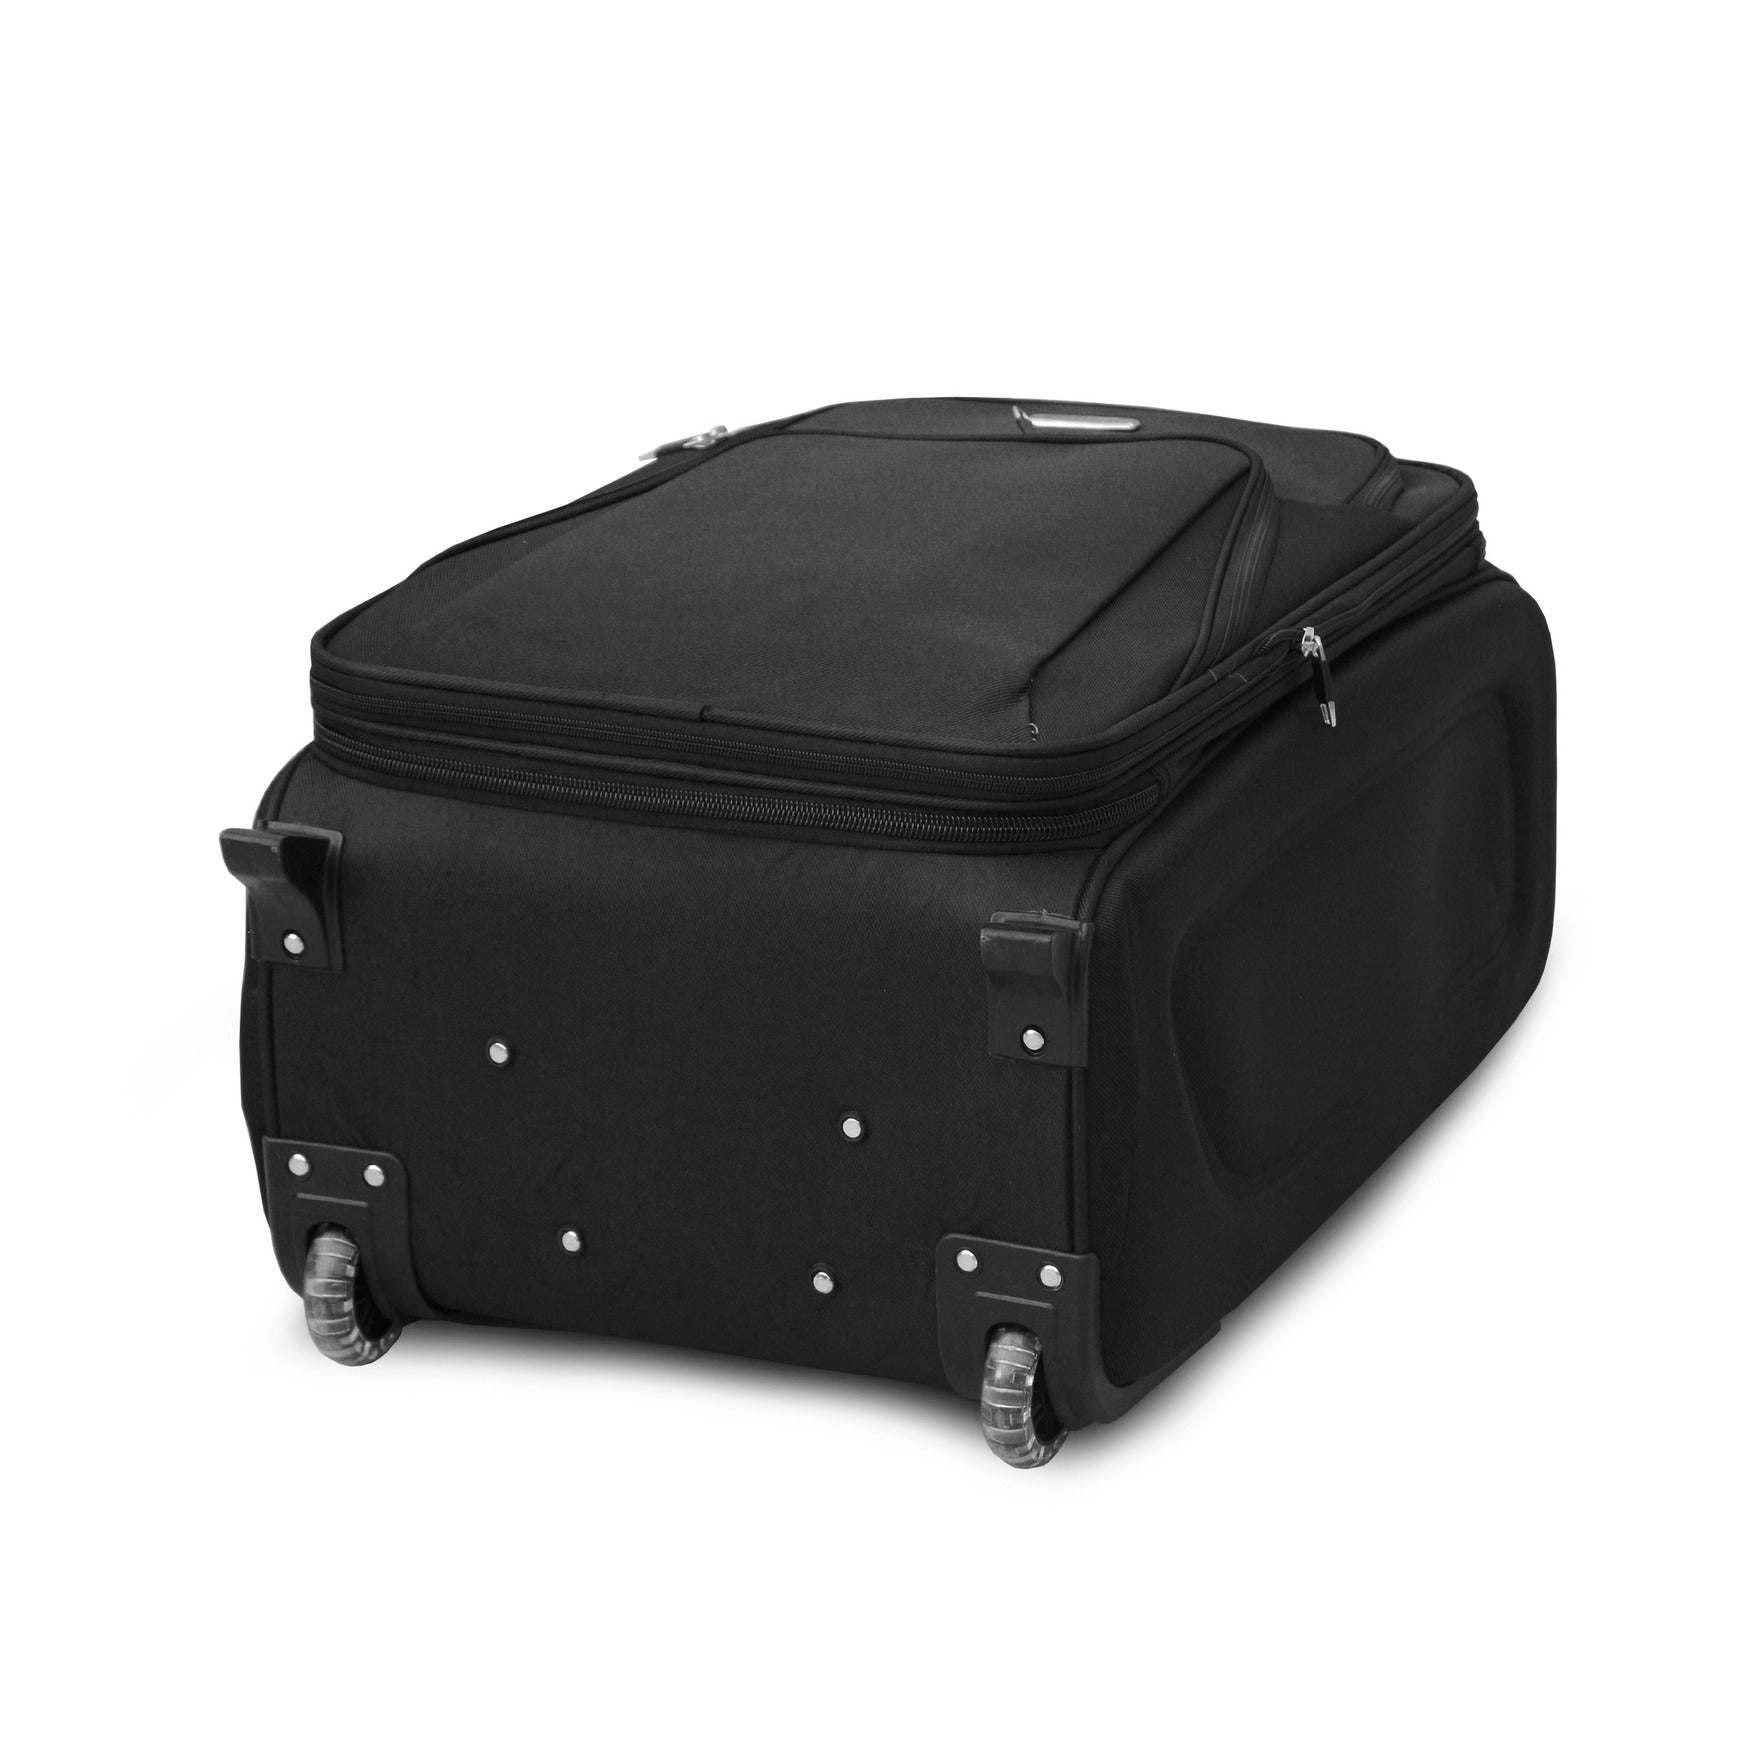 3 Piece Full Set 20" 24" 28 Inches Black Colour SJ JIAN 2 Wheel Lightweight Soft Material Luggage Bag